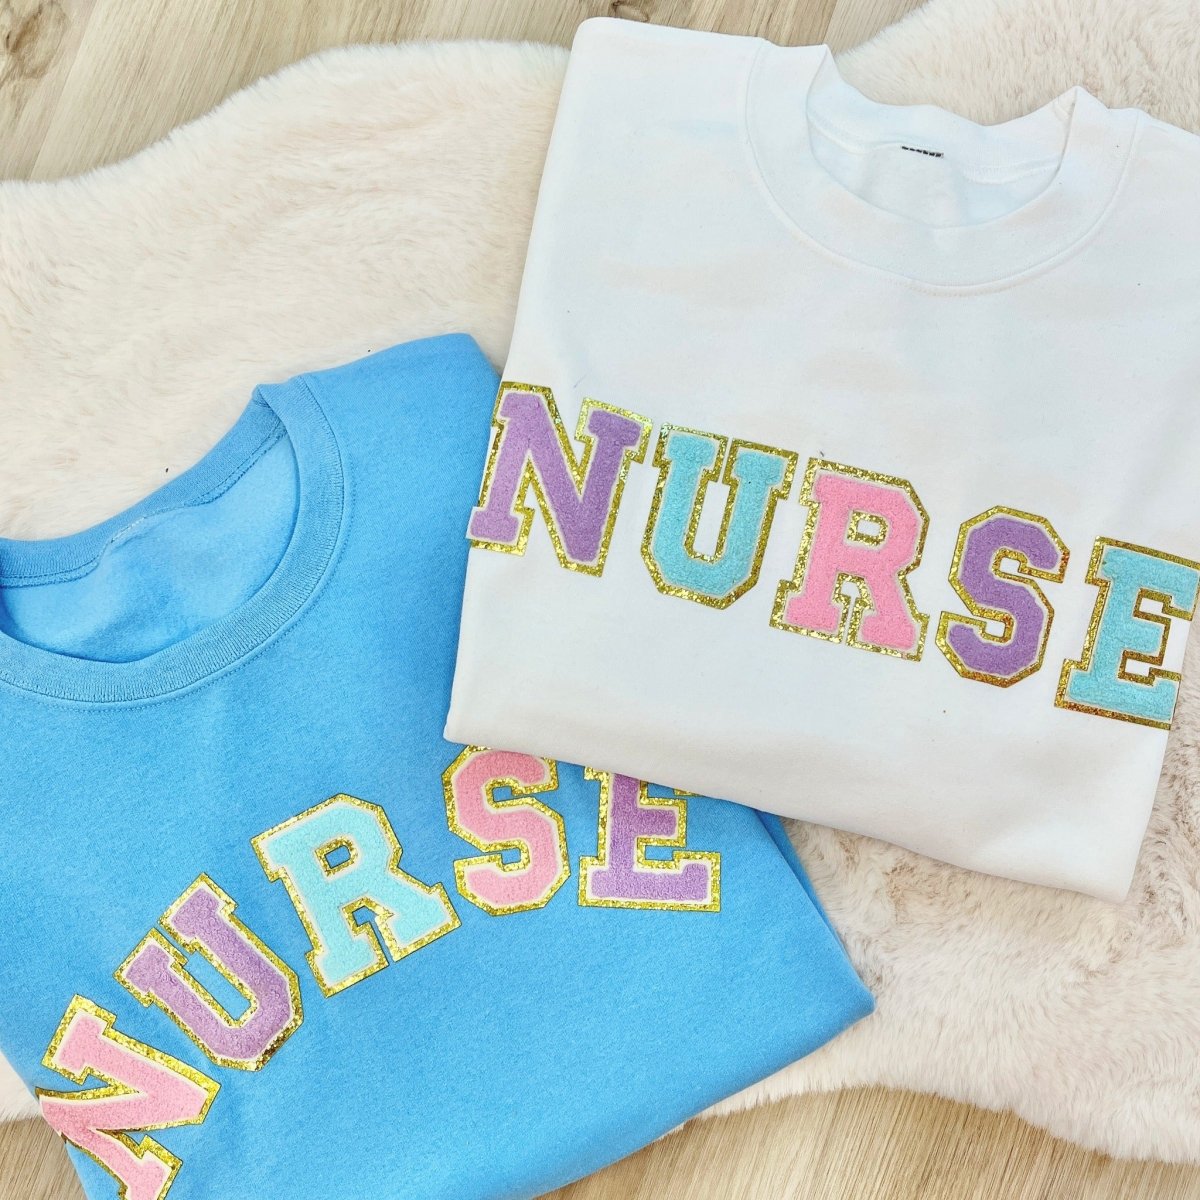 Make It Yours™ Nurse Letter Patch Sweatshirt - United Monograms